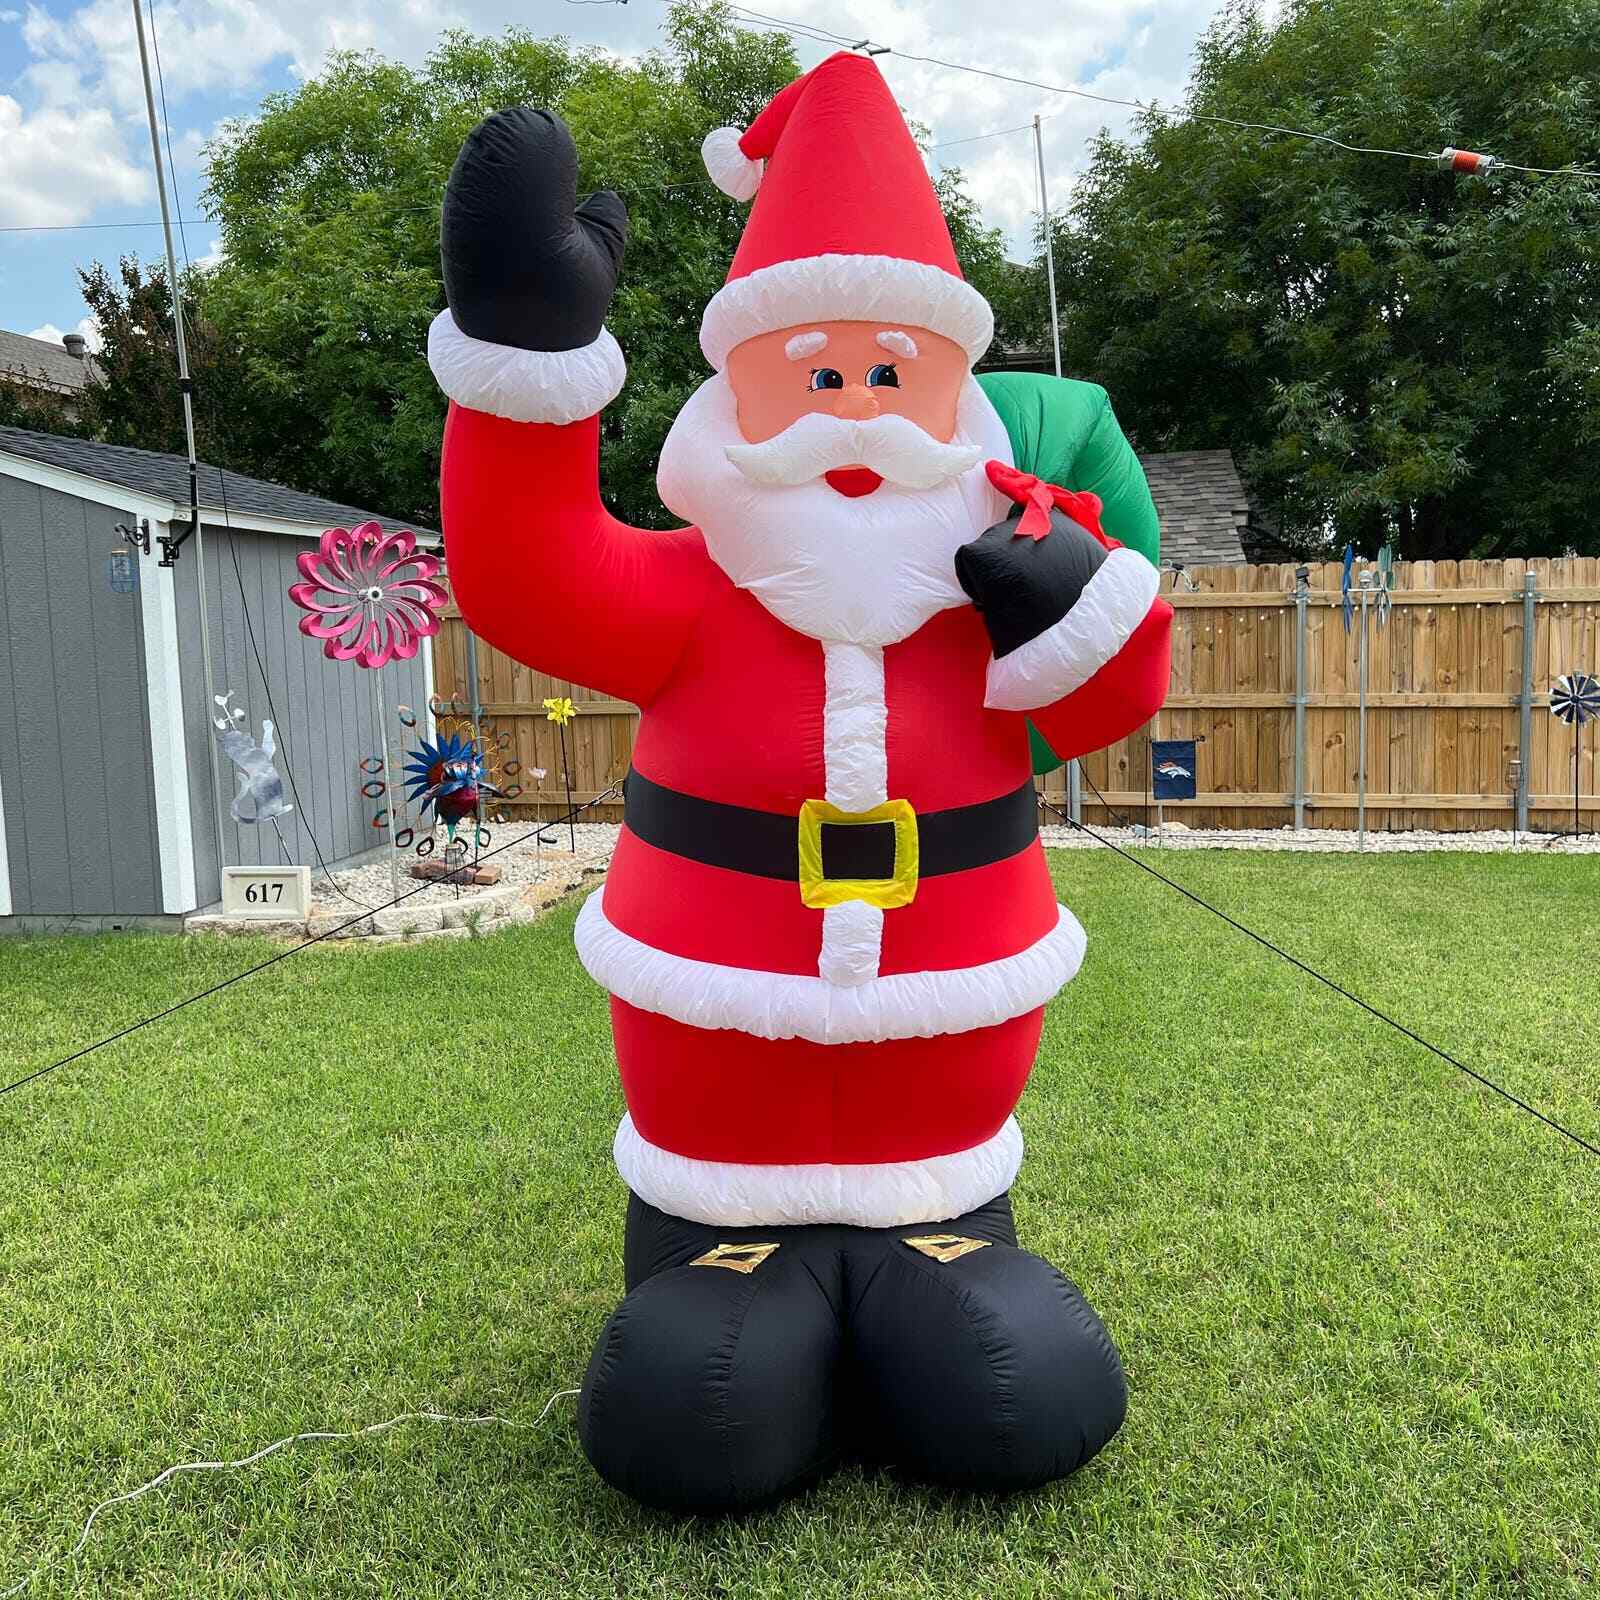 Gemmy Air Blown 8' Tall Big Santa Claus Light Up Inflatable Christmas Yard Decor